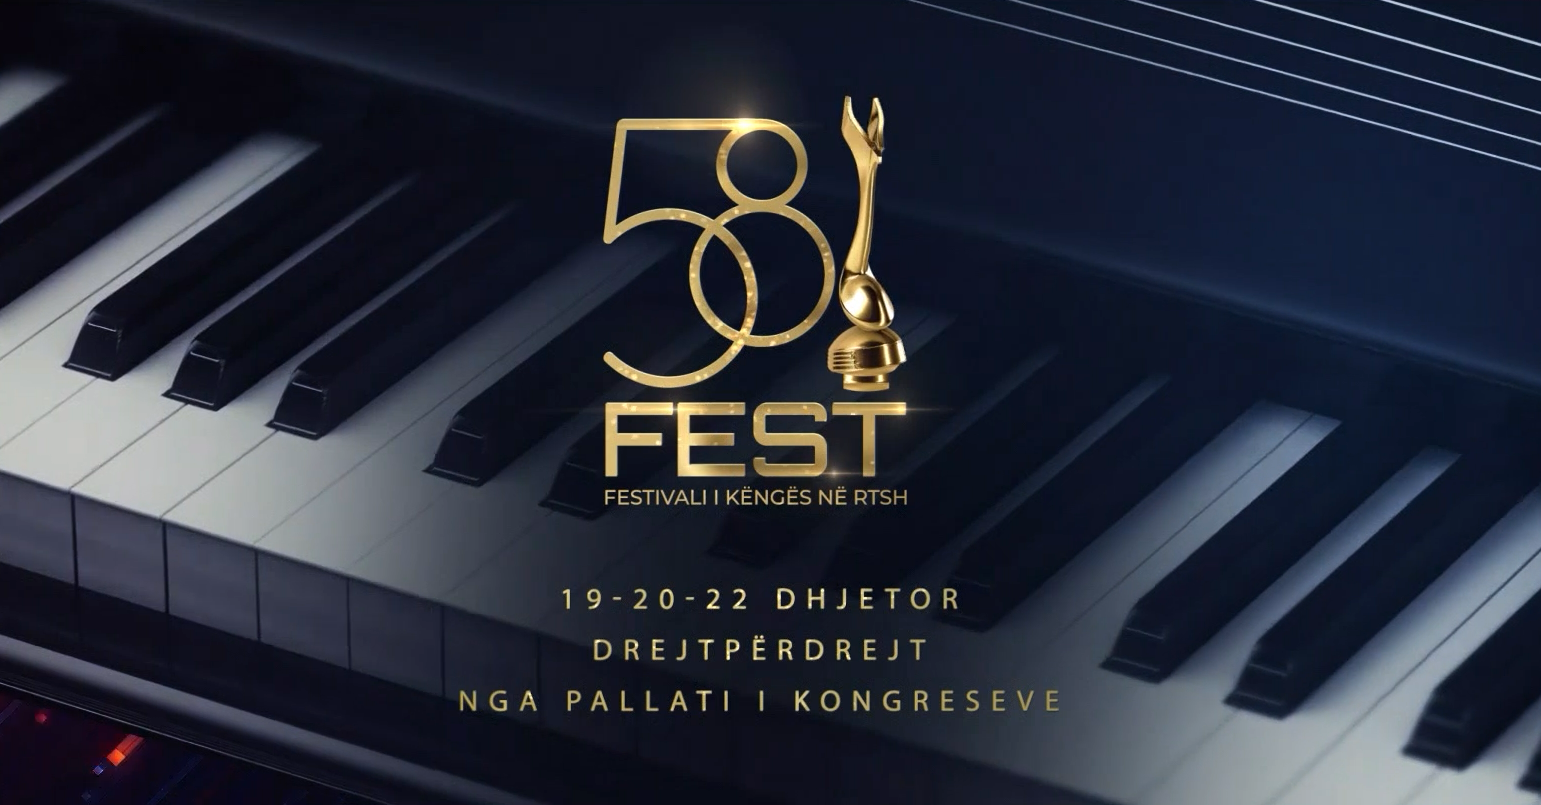 Tonight: Watch Festivali i Kenges kick off live from Tirana